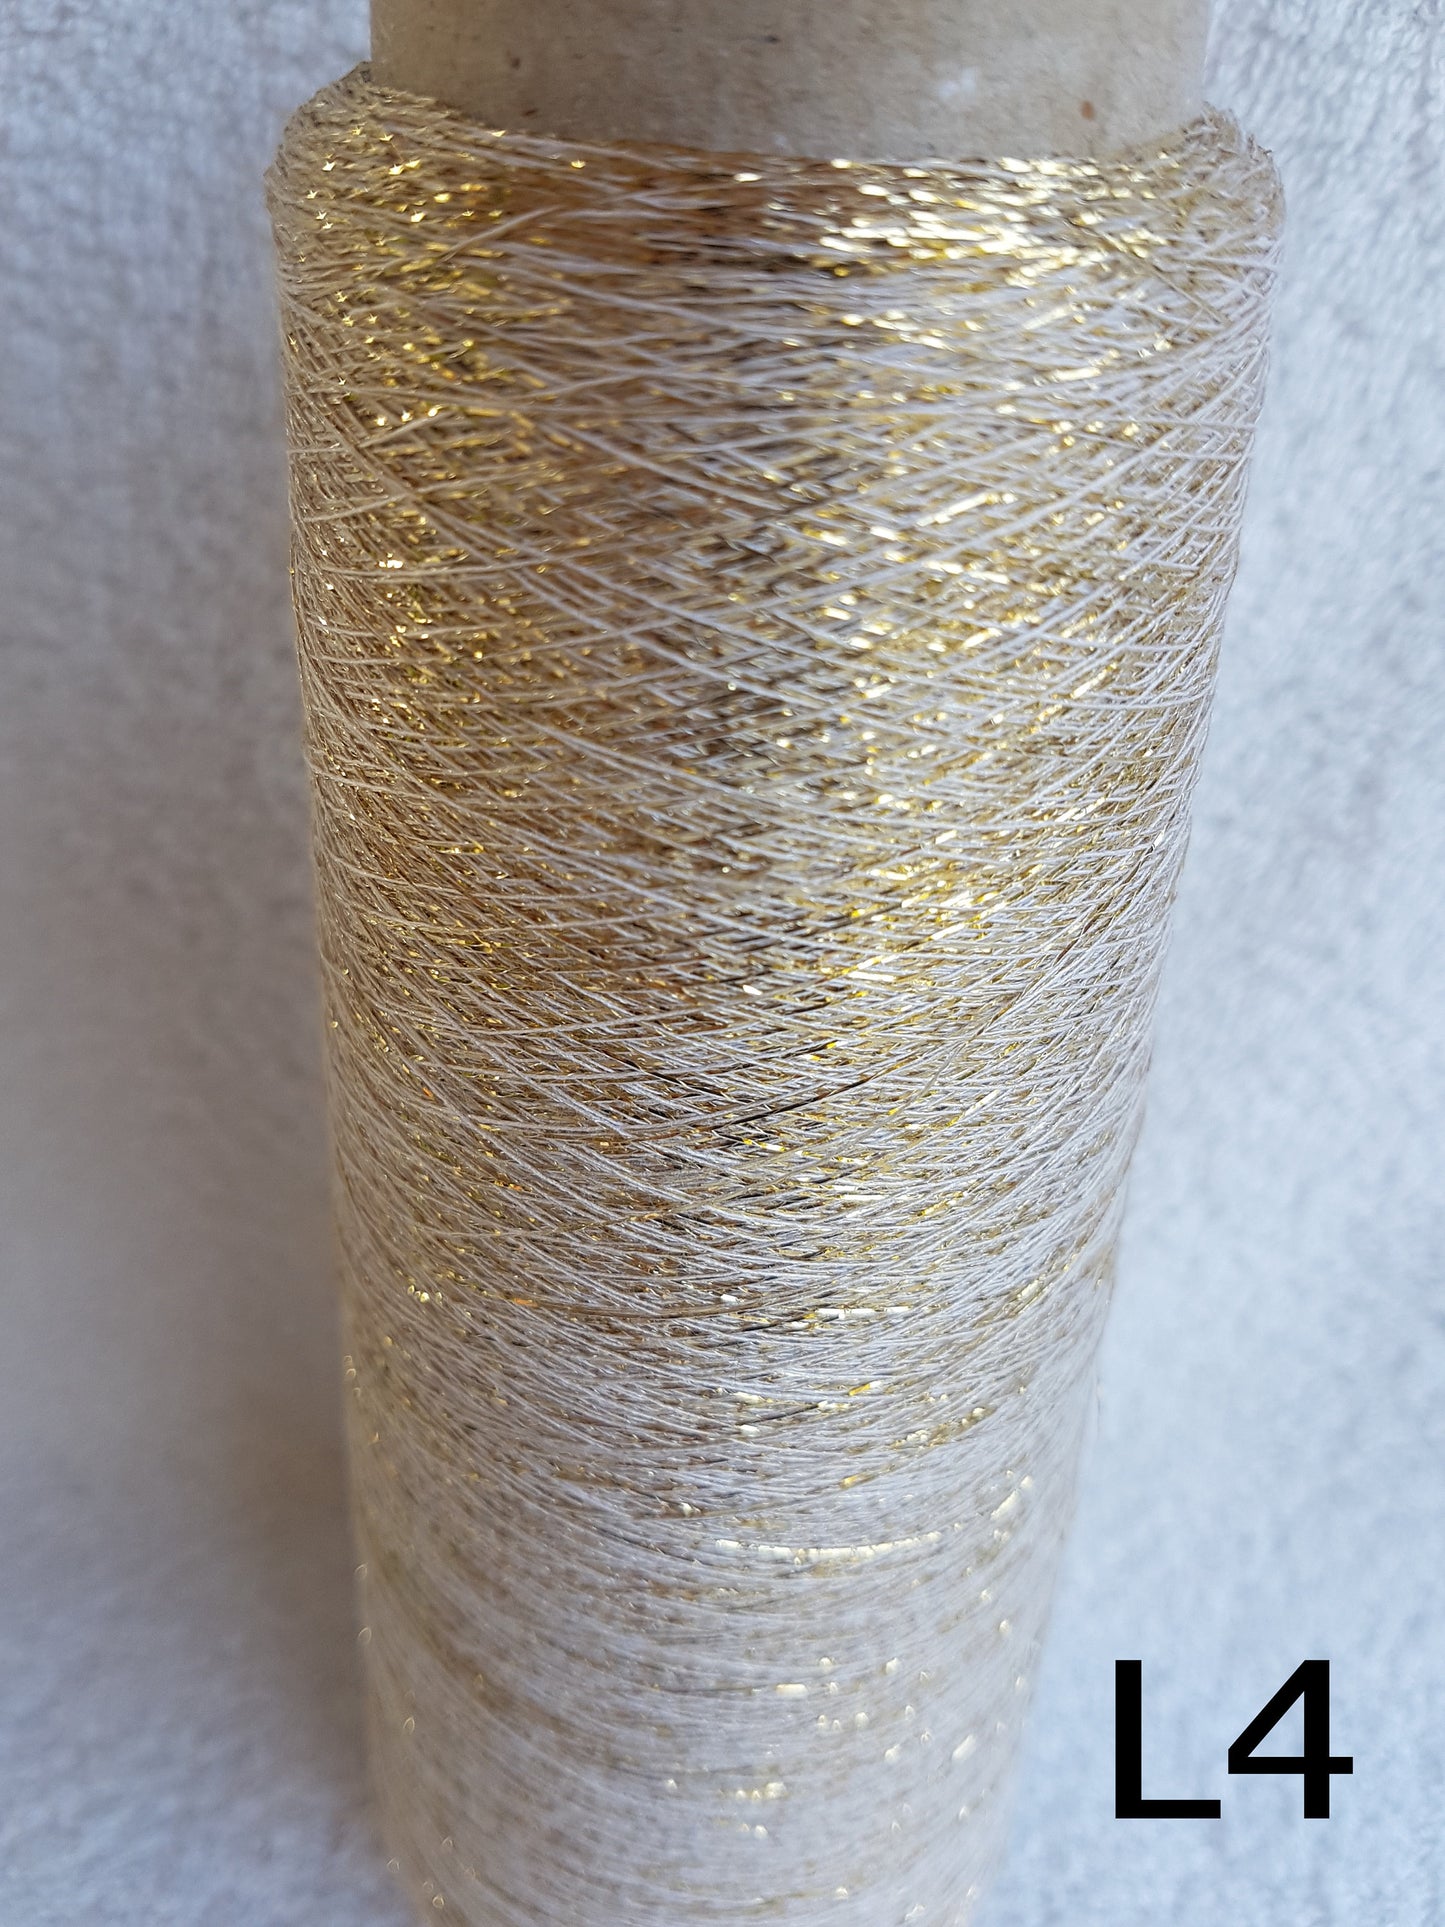 Lurex Glitter Metallic Italian Knitting Yarn for knitting-in color Beige Brown Gold Rose L3-L4